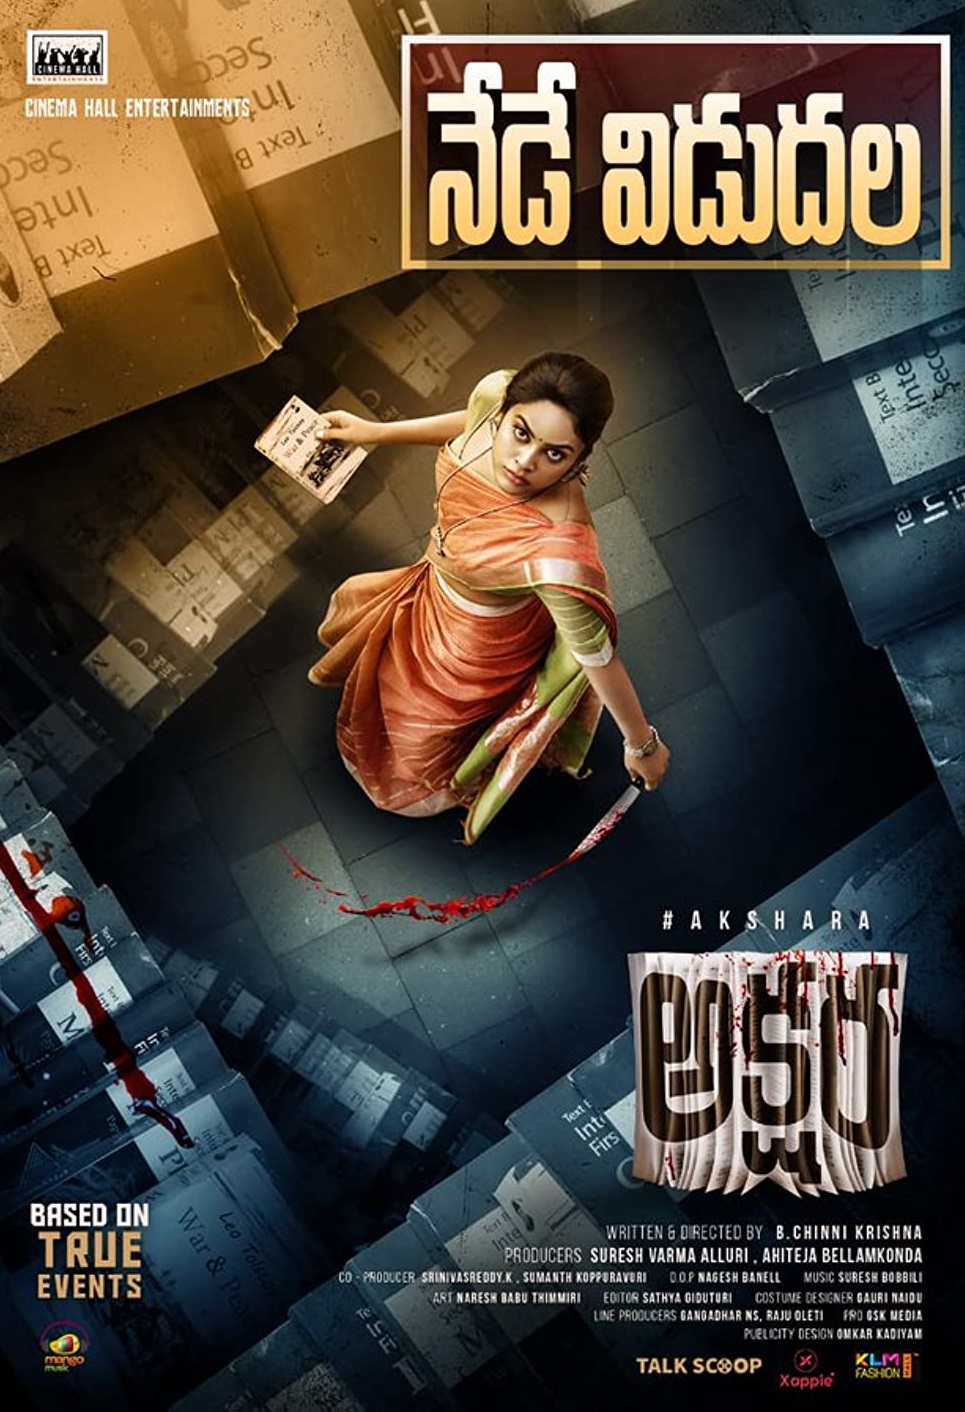 Akshara 2021 Tamil Dubbed Thriller Movie Online